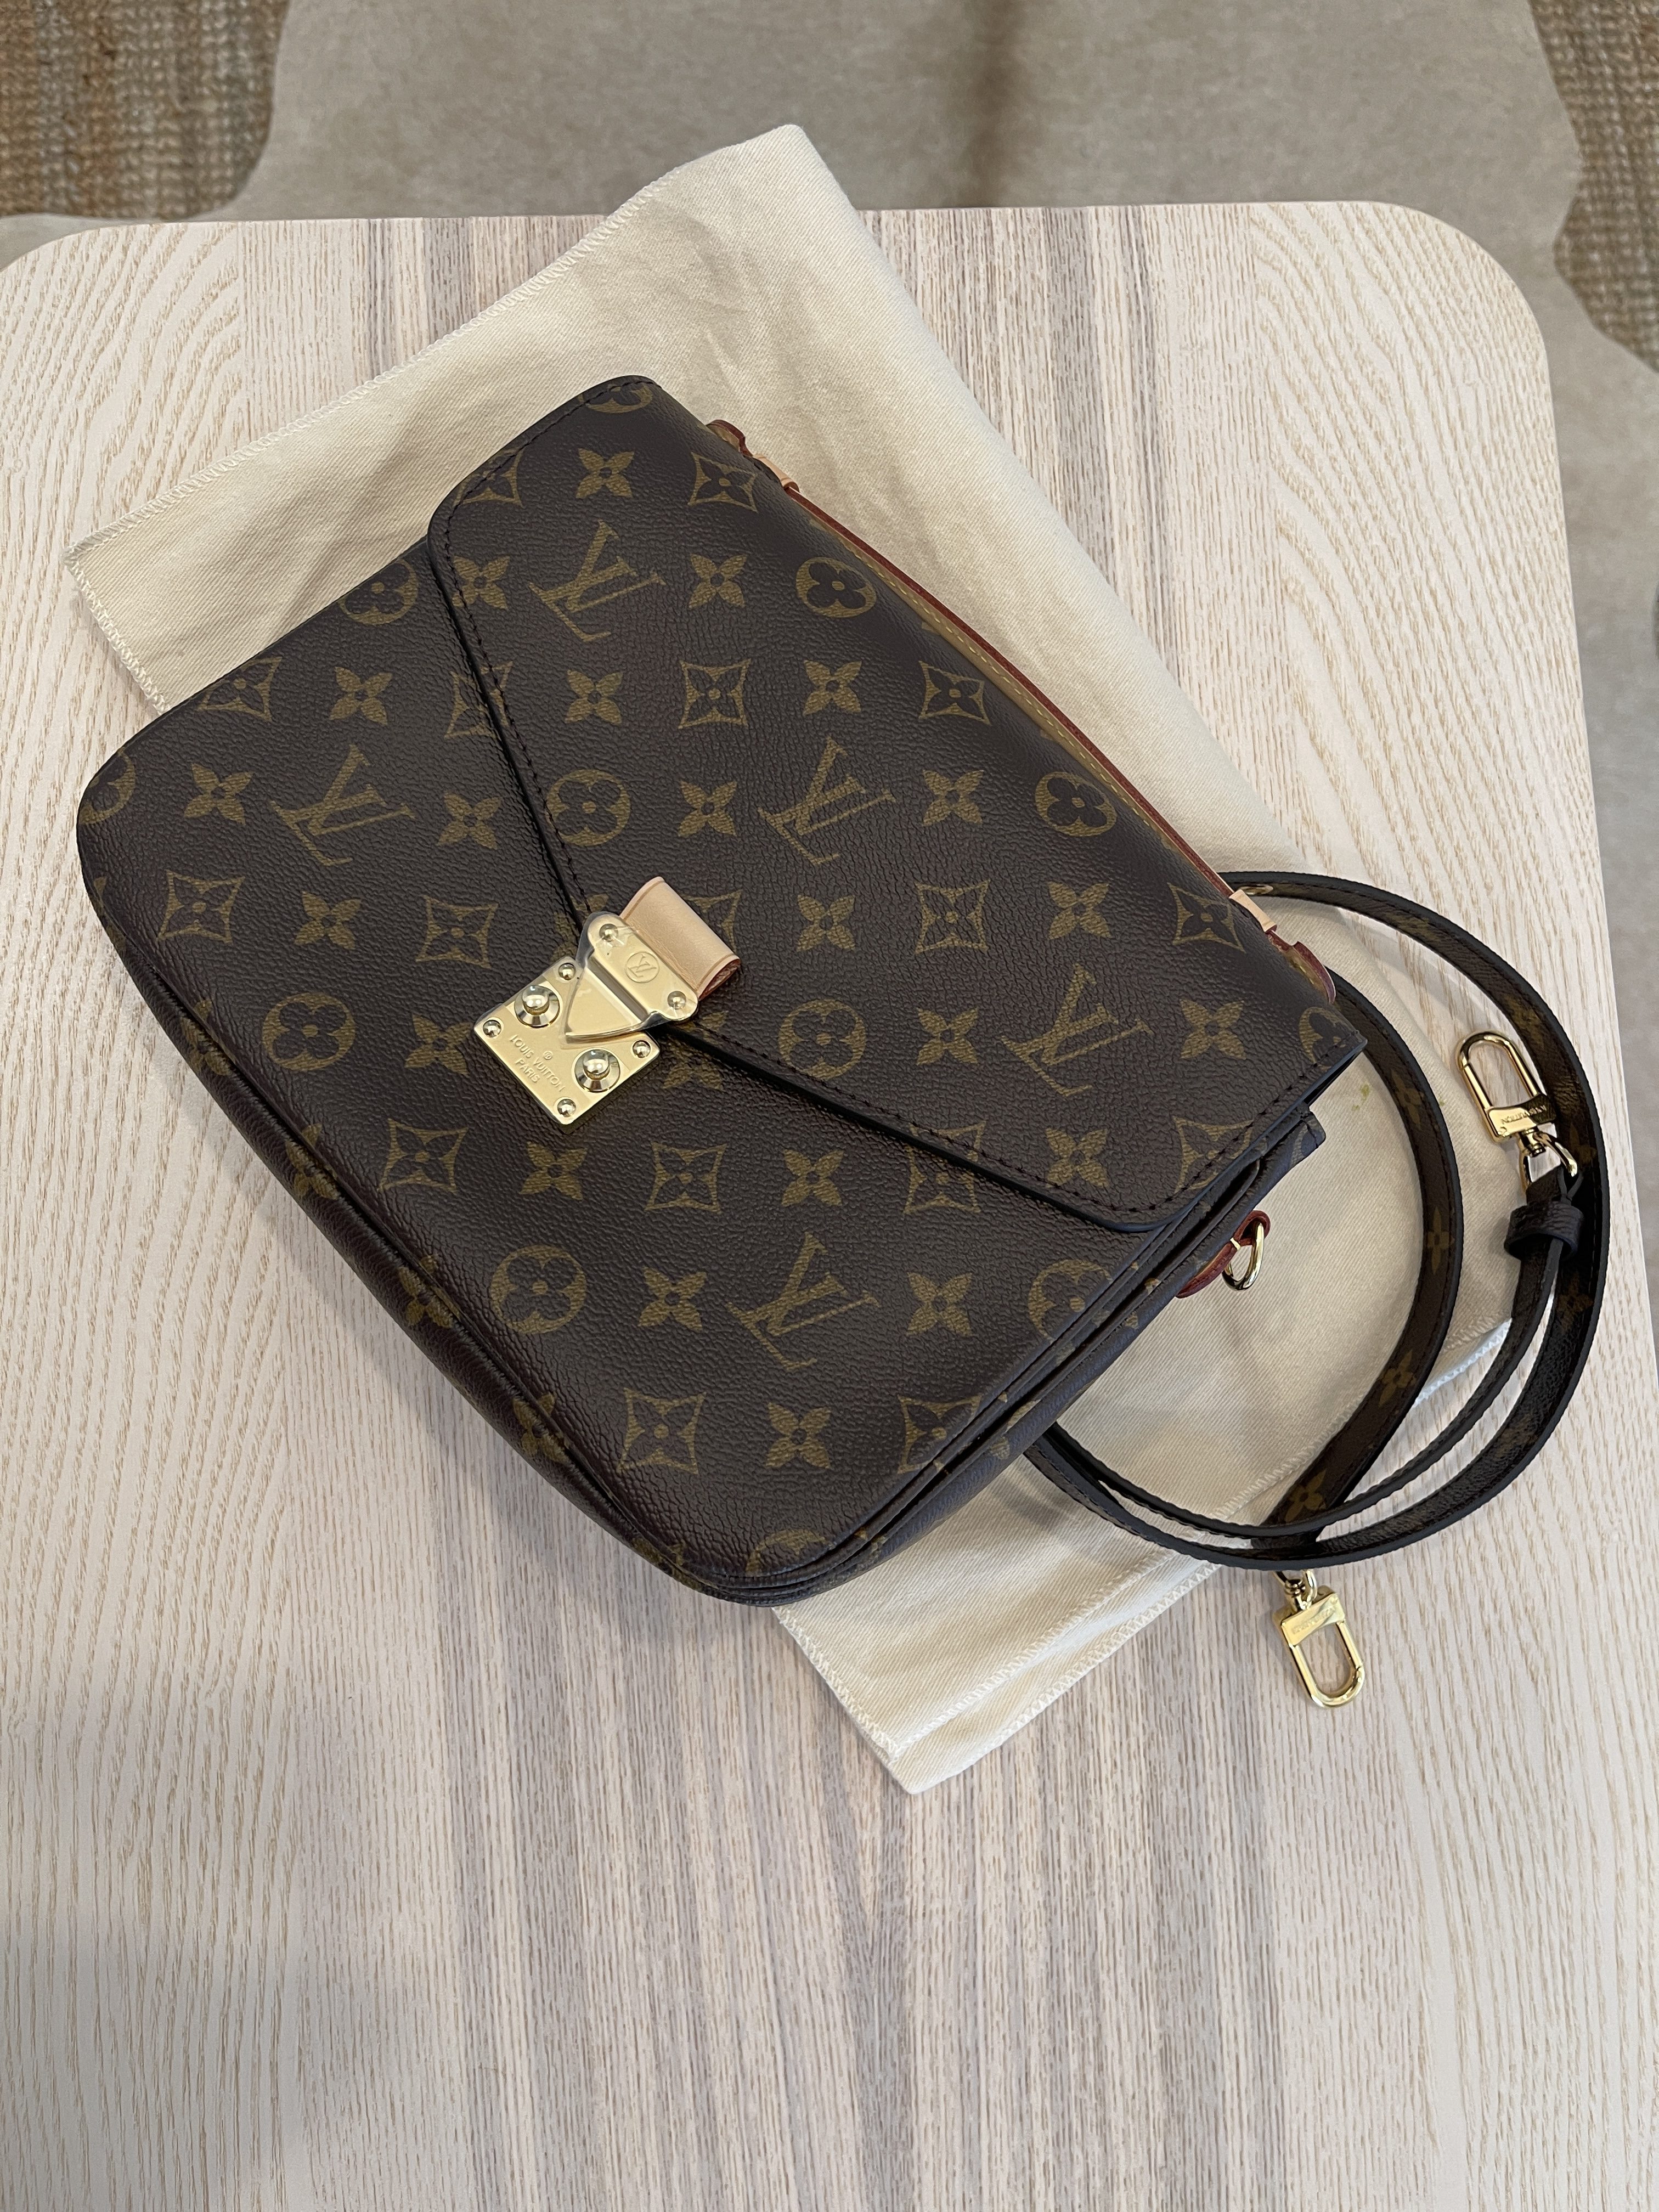 LV Pochette Metis: Luxury Monogram Handbag